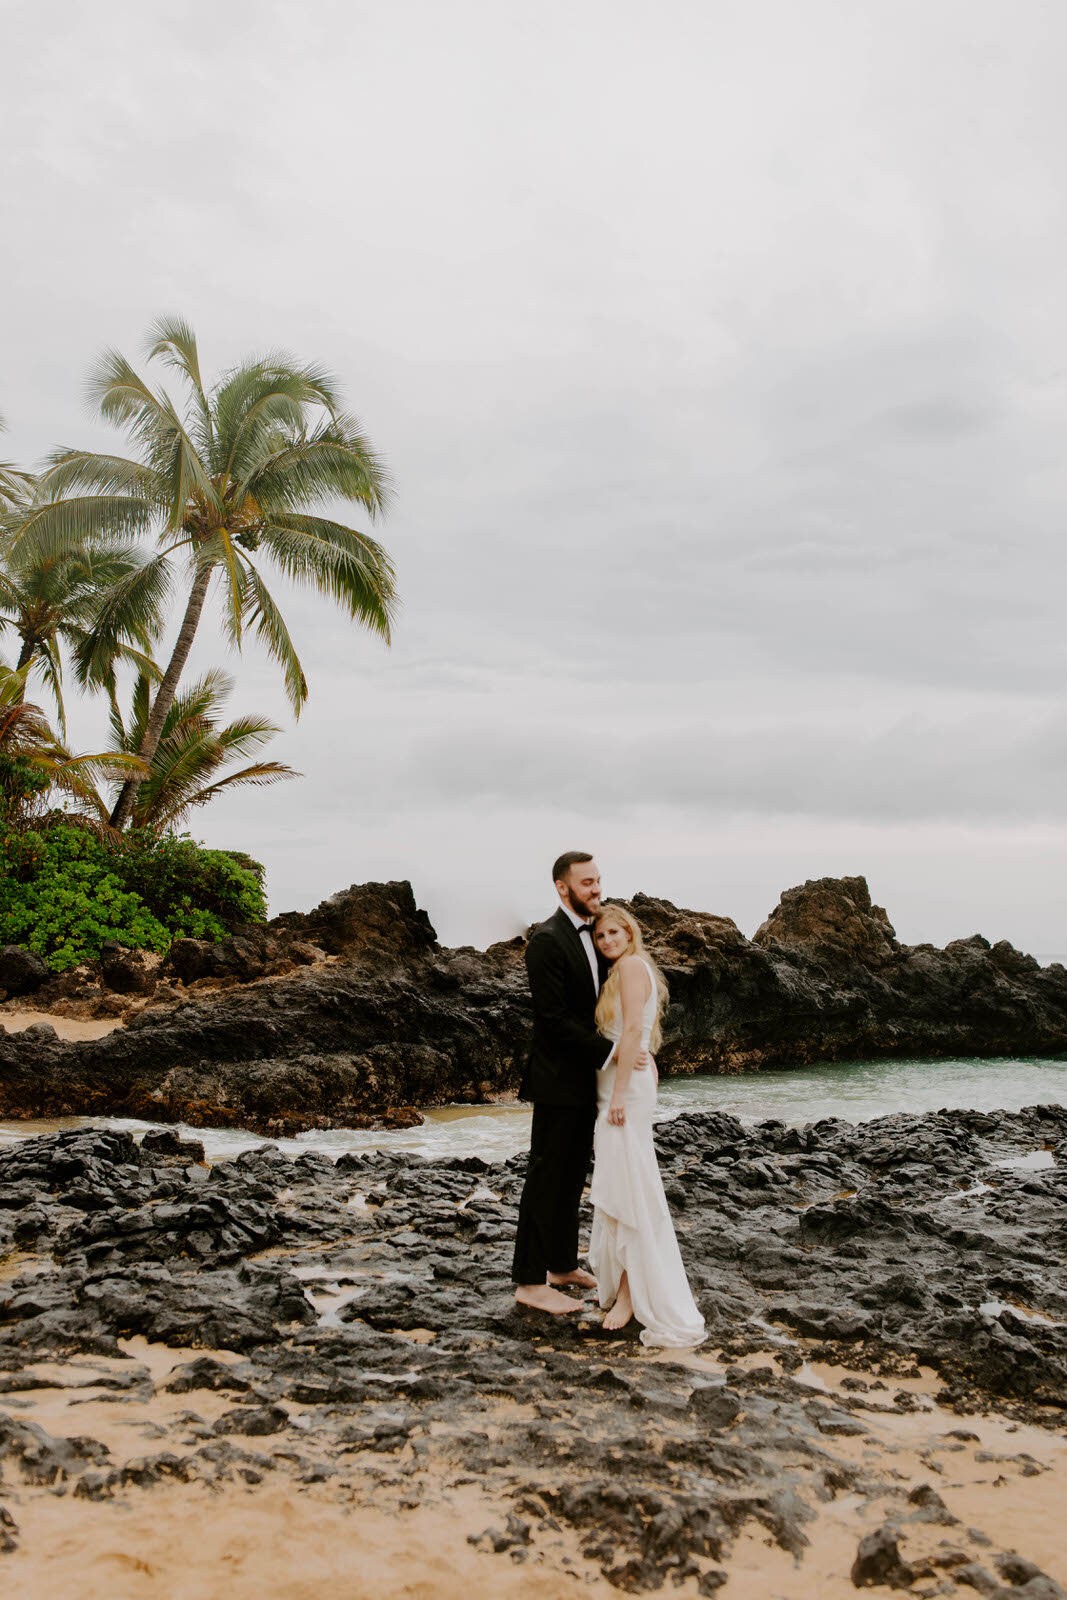 Brianna-Broyles-Photography-Fairmont-Kea-Lani-Wedding-Maui-Photographer-57.jpg